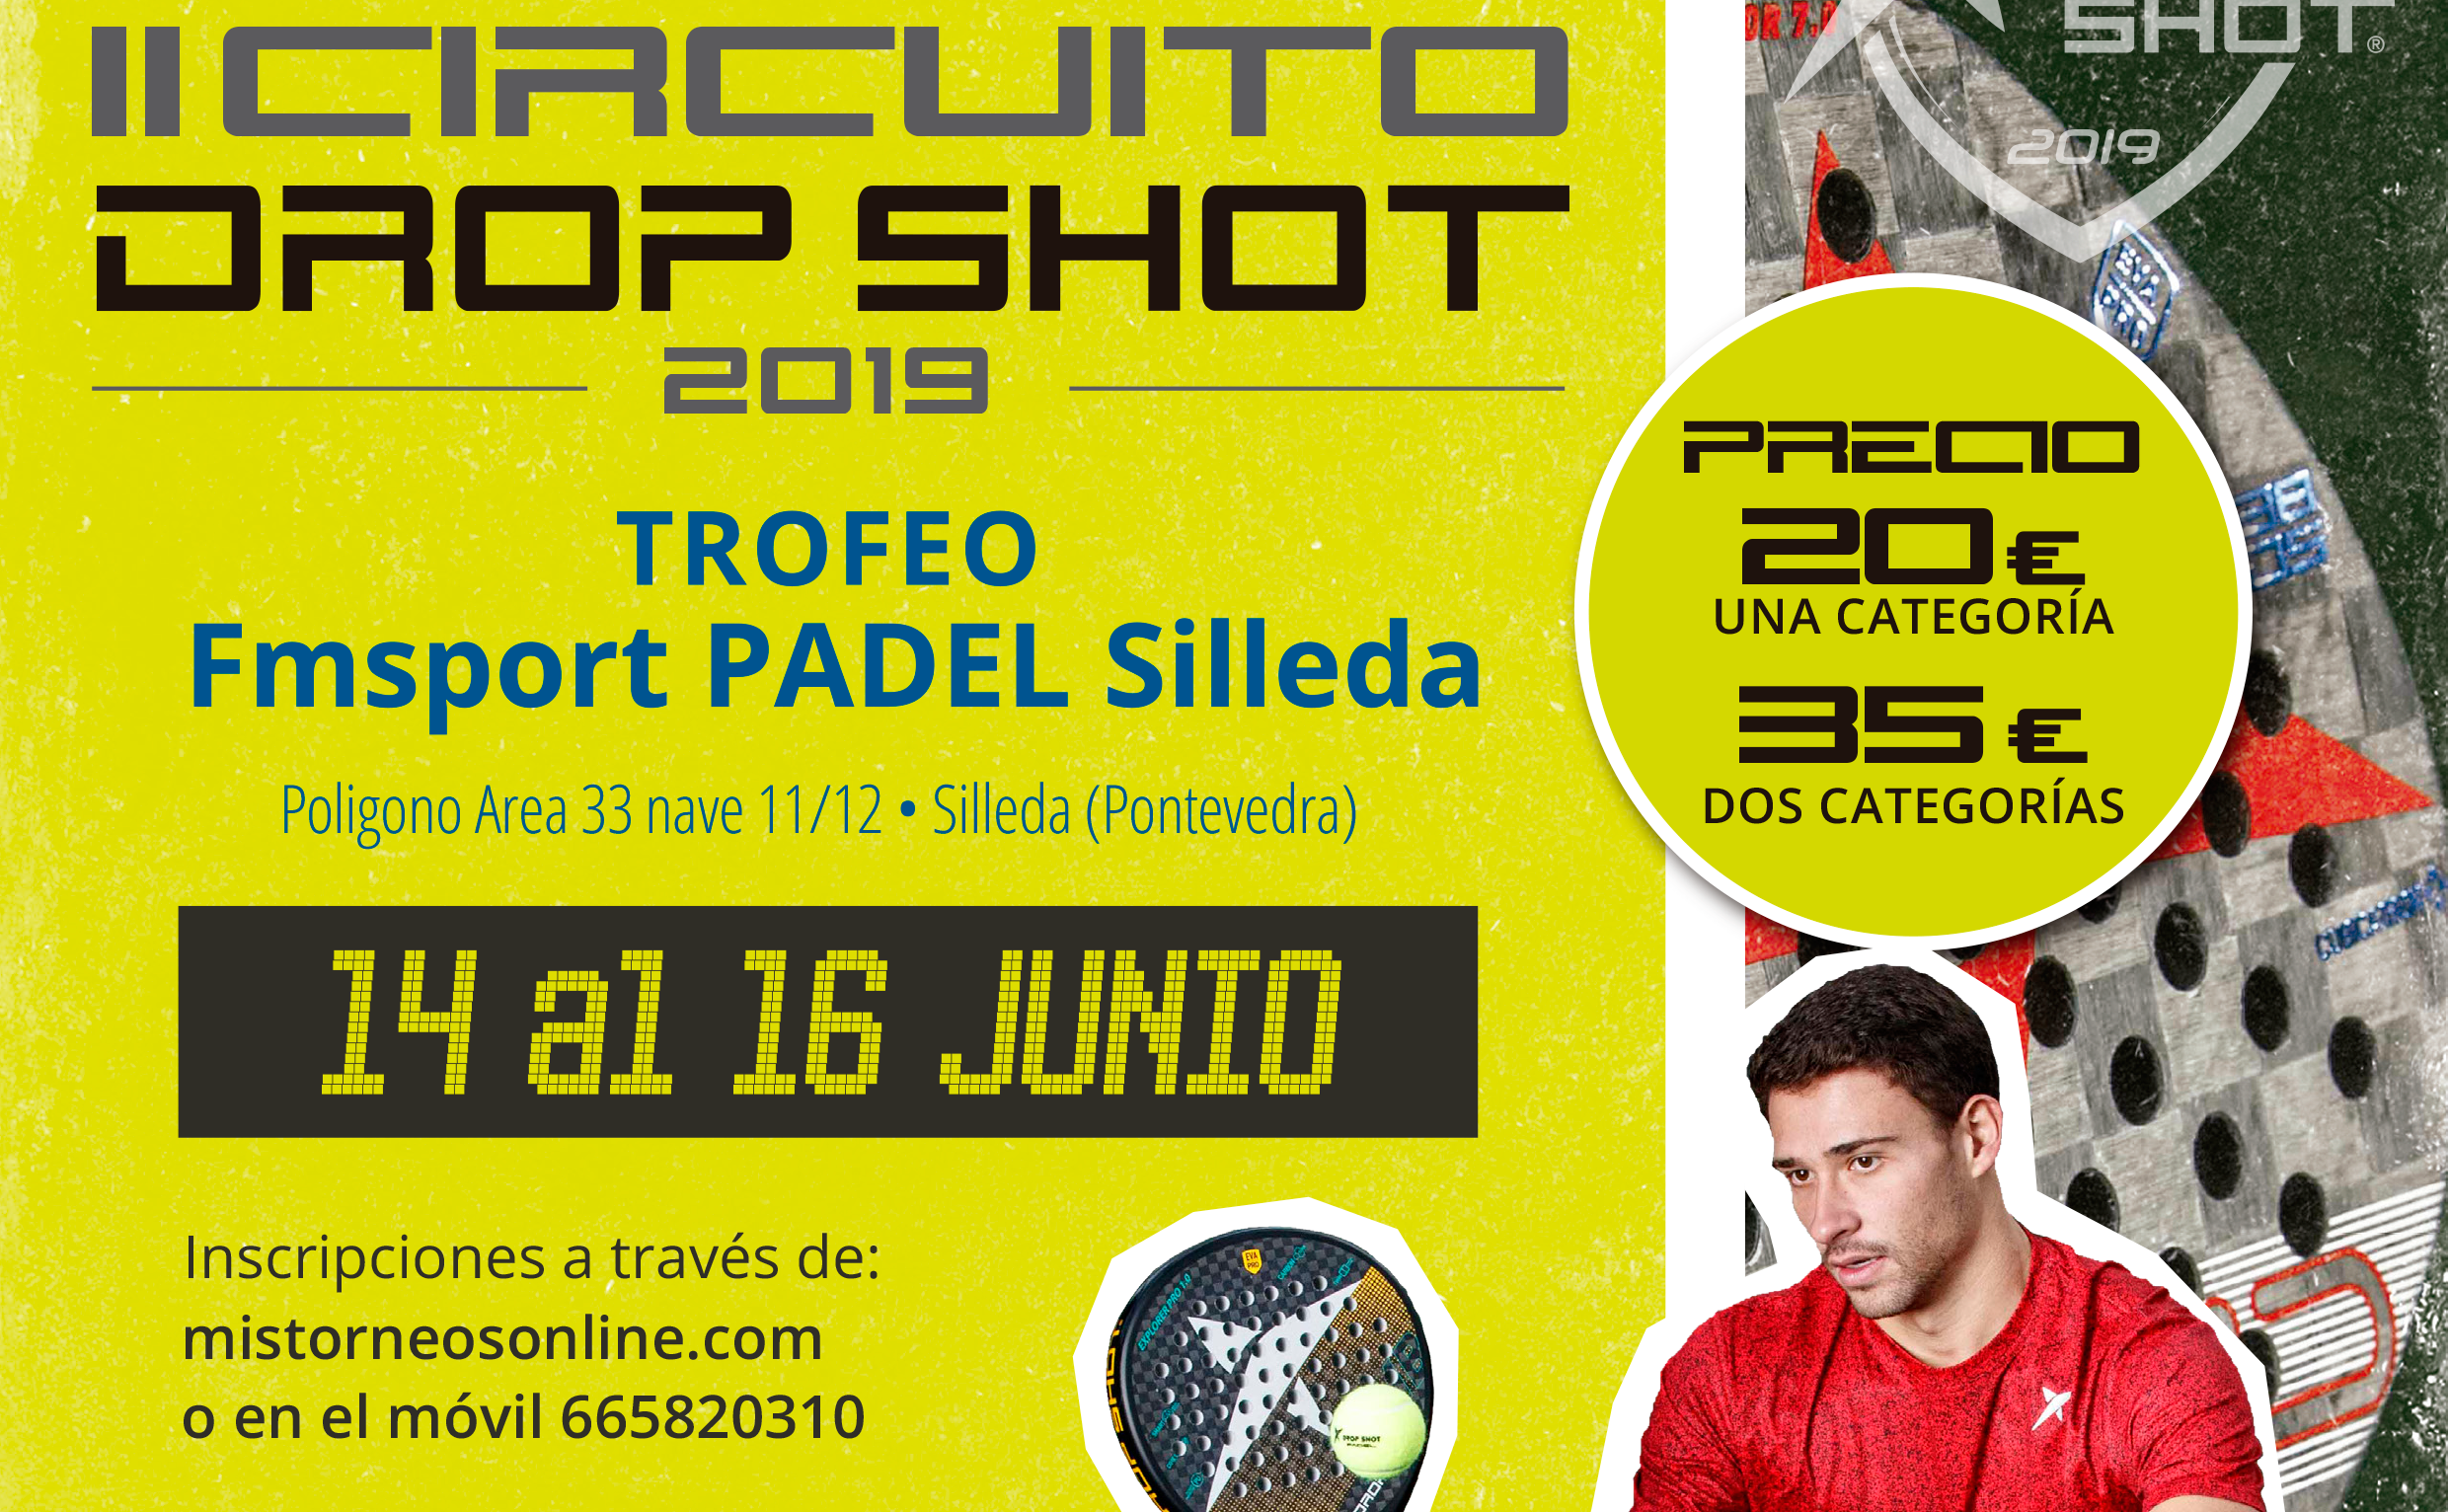 El II Circuito Drop Shot viaja en junio a Pontevedra